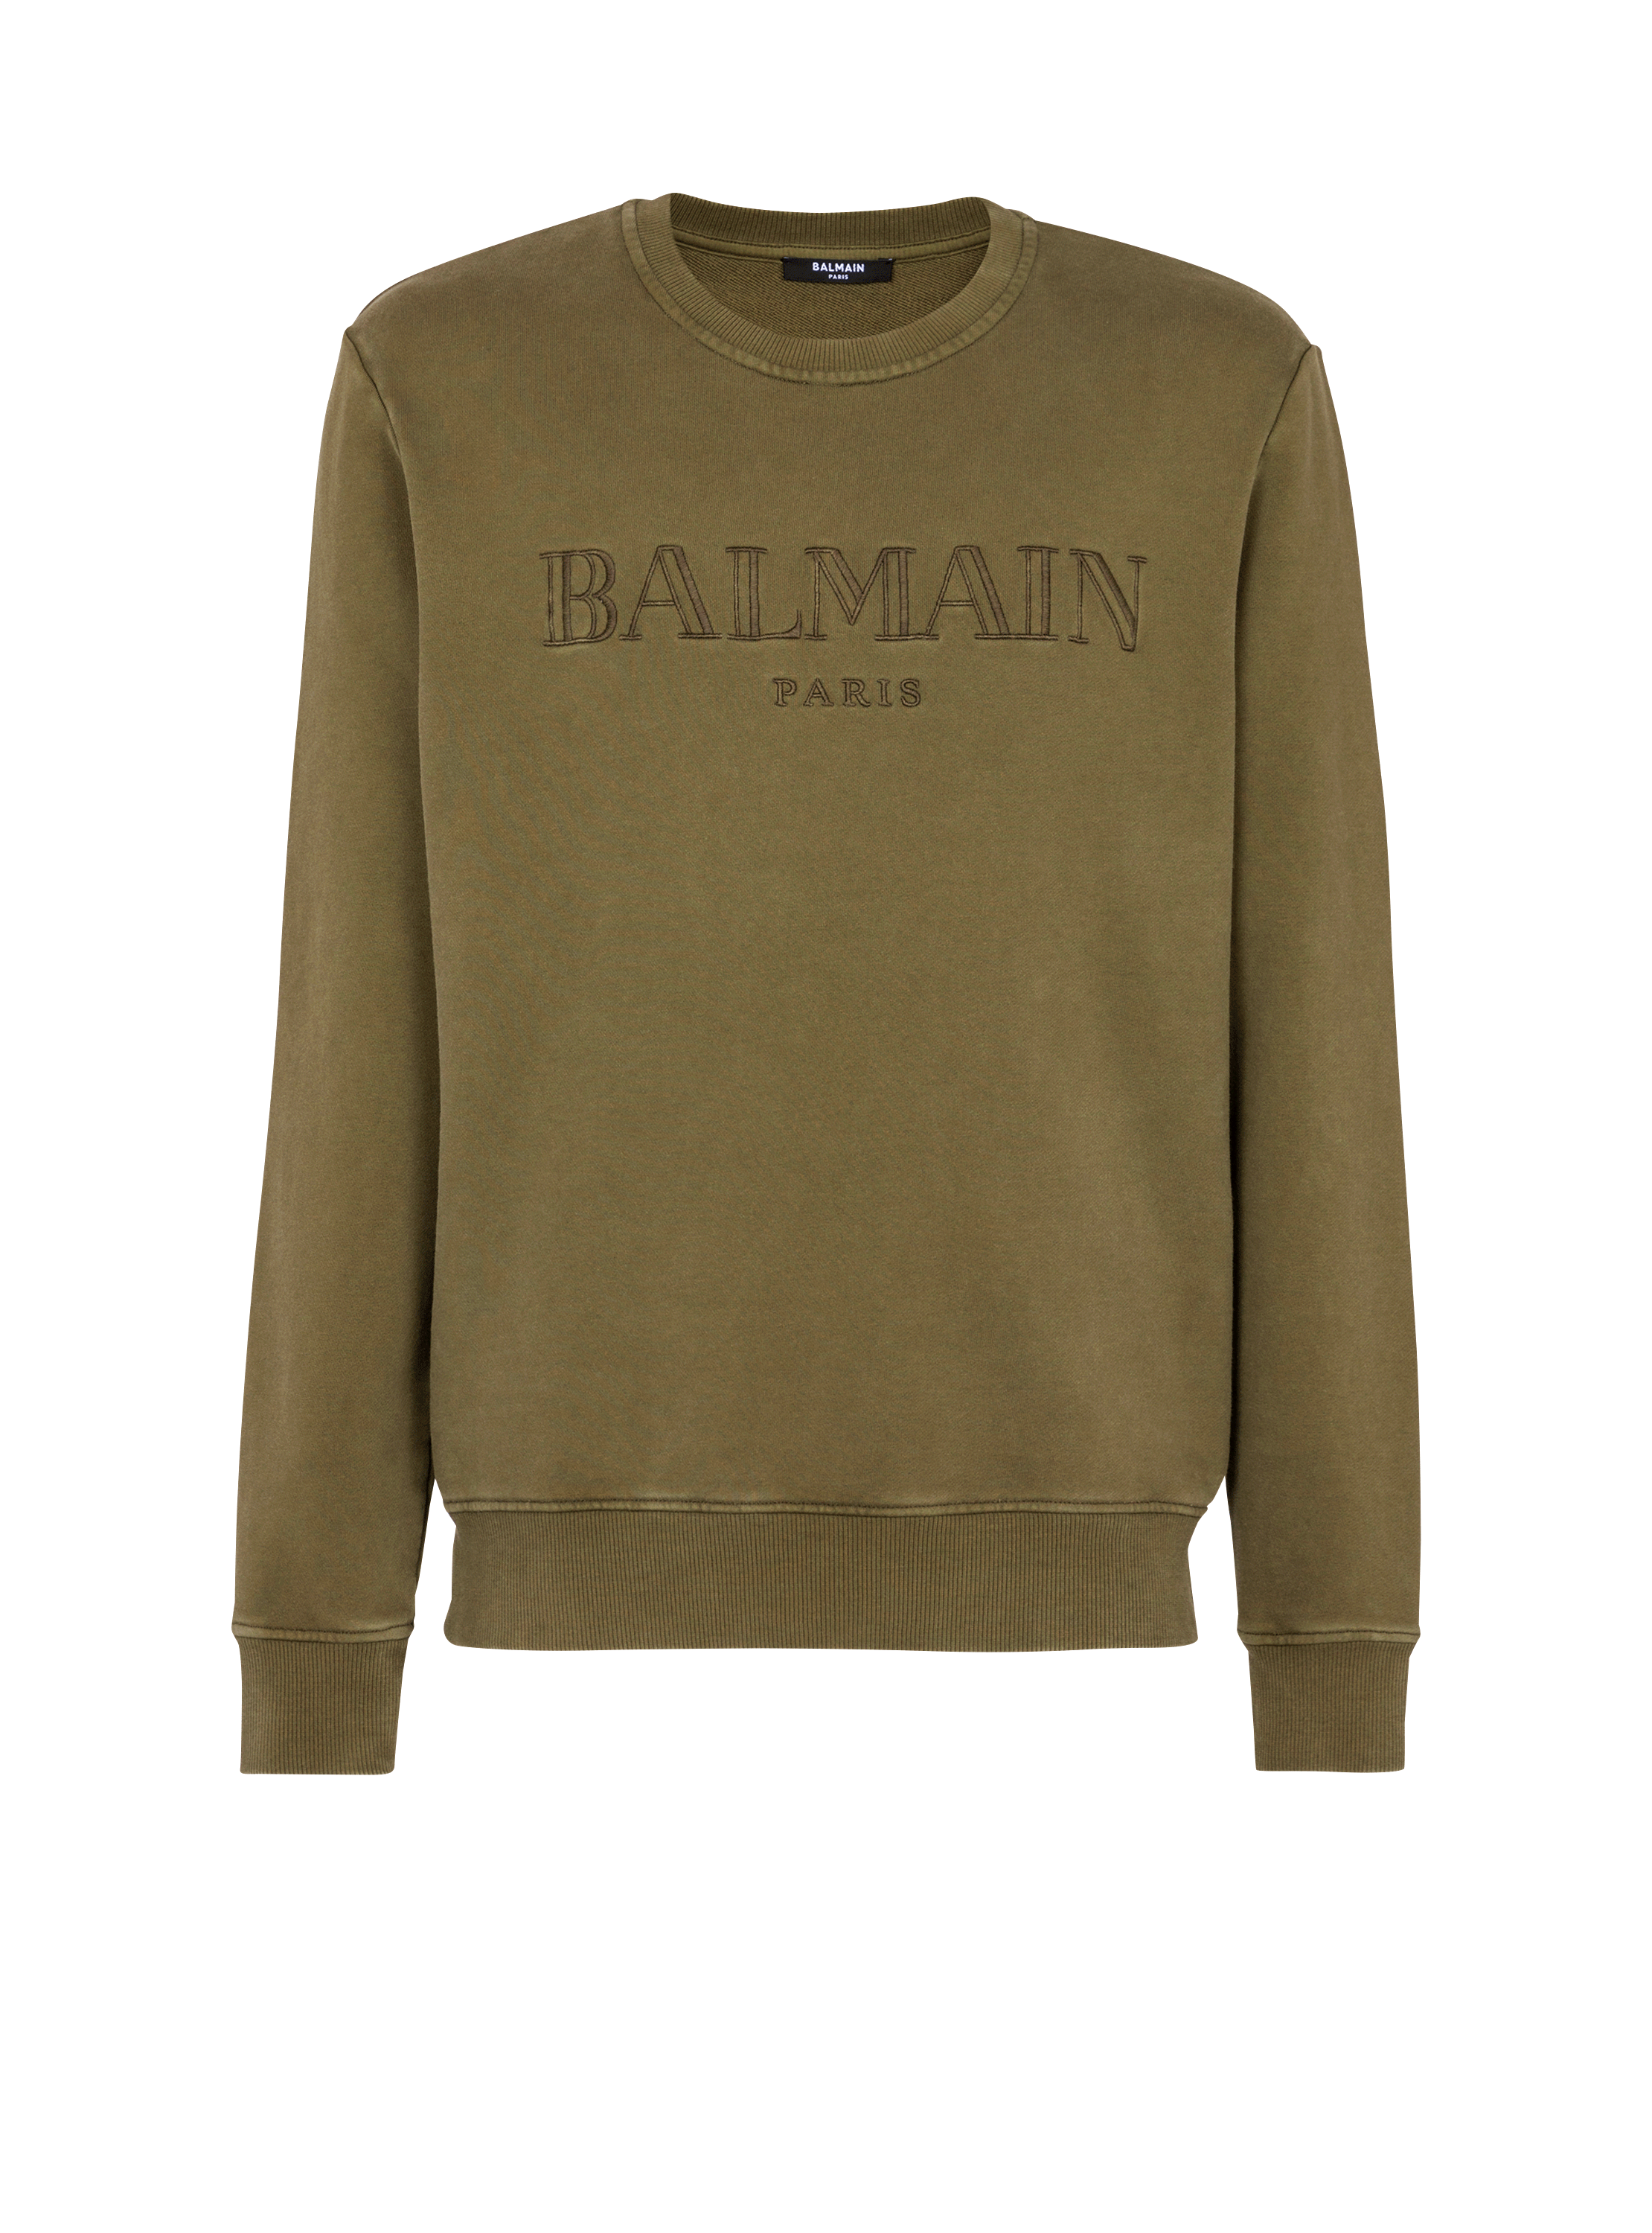 Balmain Vintage Sweatshirt, khaki, hi-res